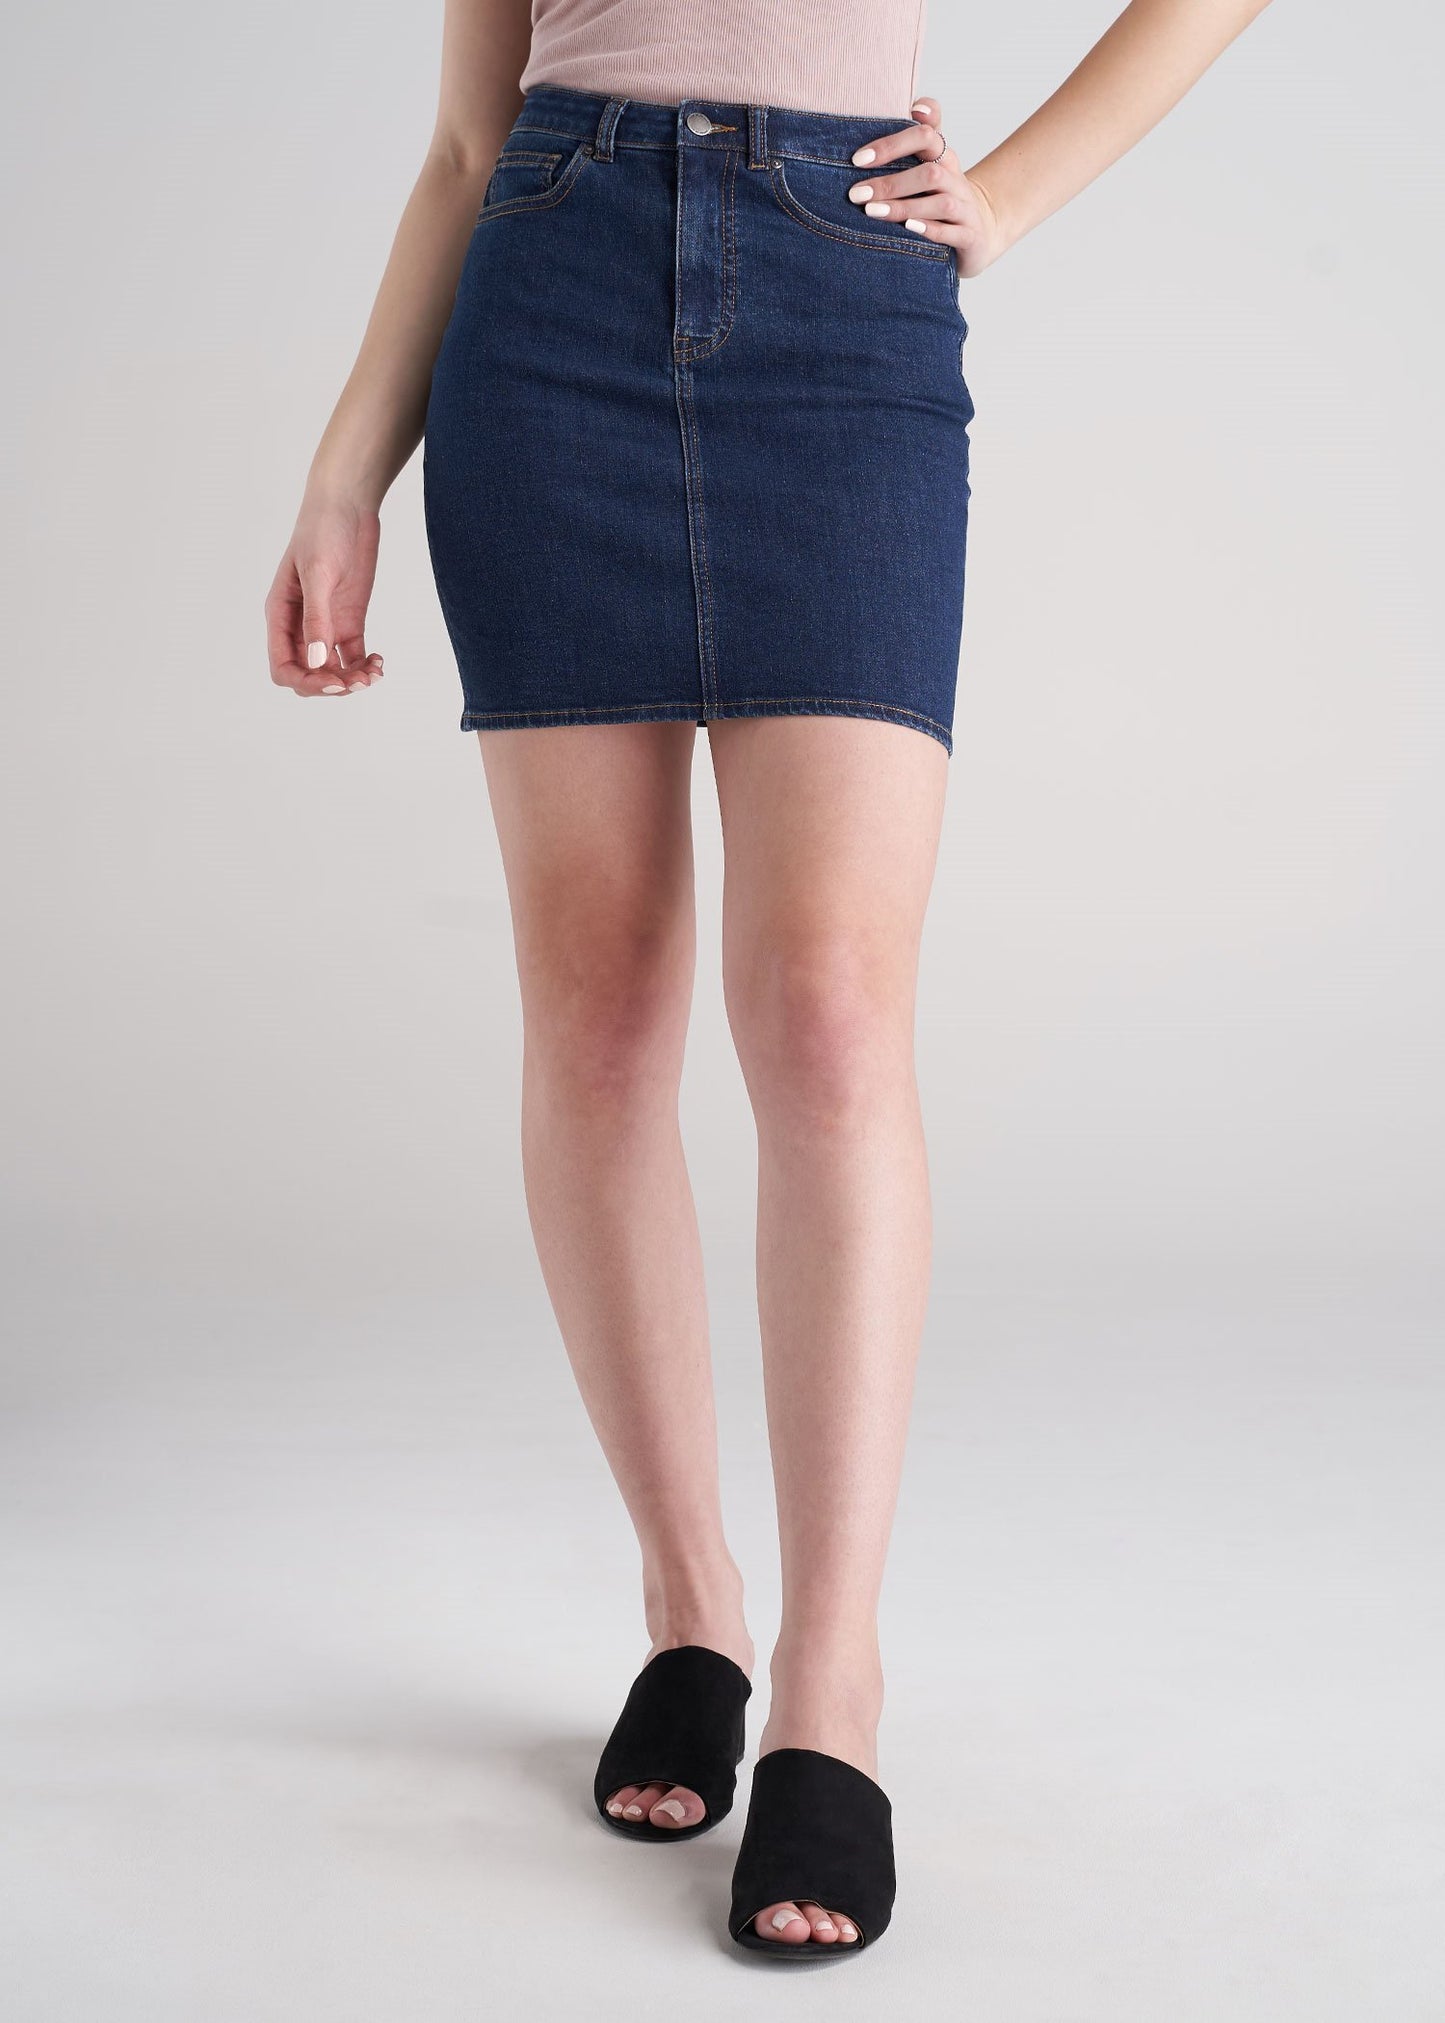 Women's Denim Pencil Jean Skirt Casual Short Jeans Skirt Frayed